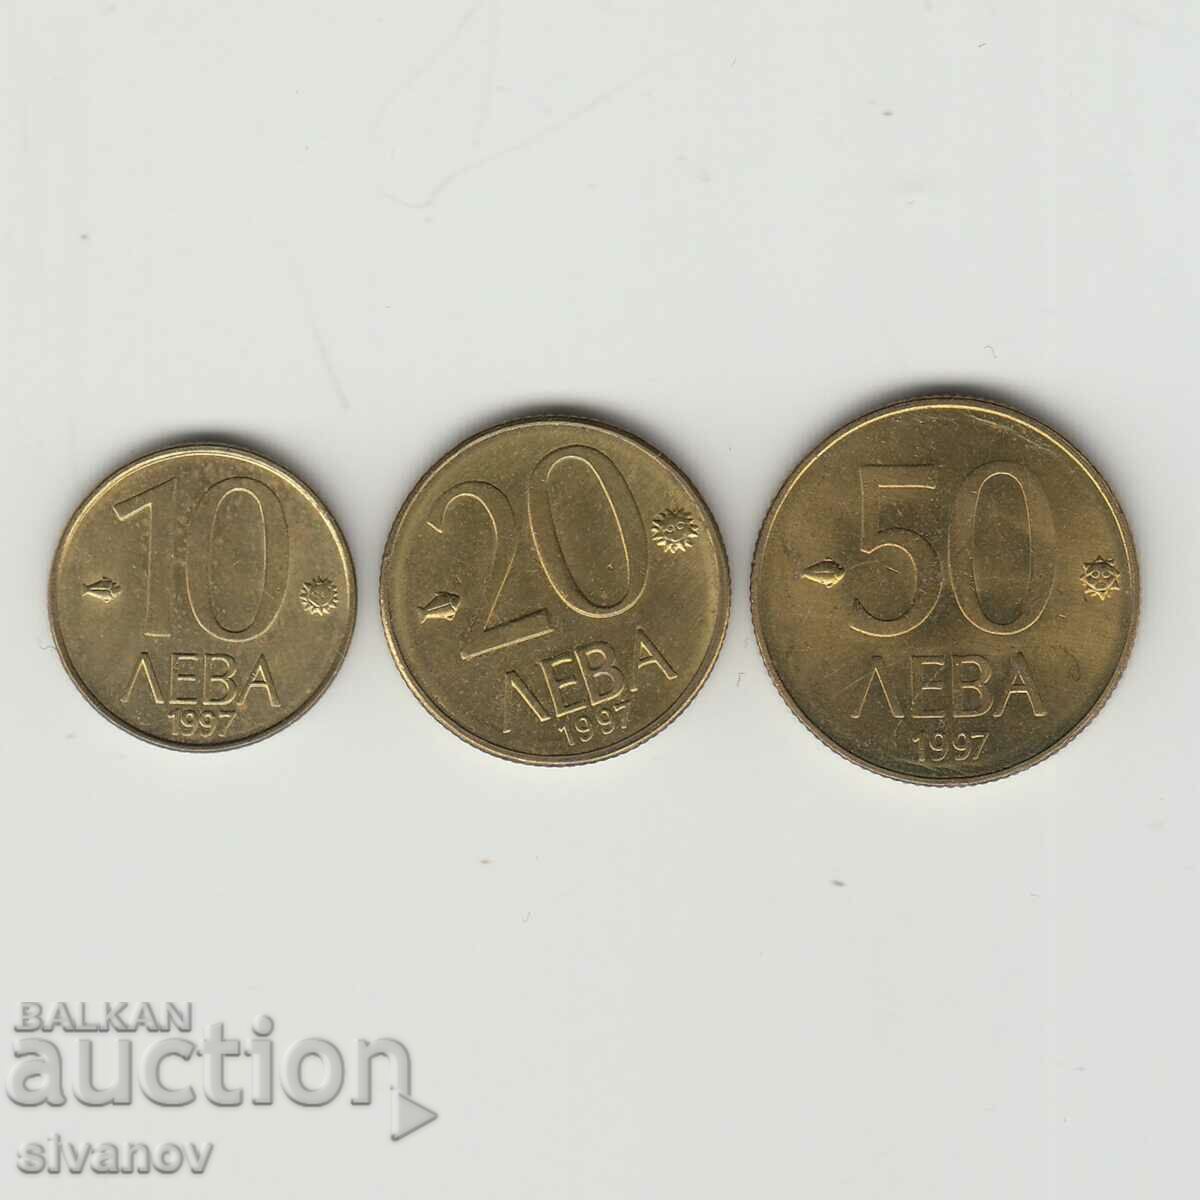 Bulgaria 10, 20, 50 leva 1997 set lot #5409